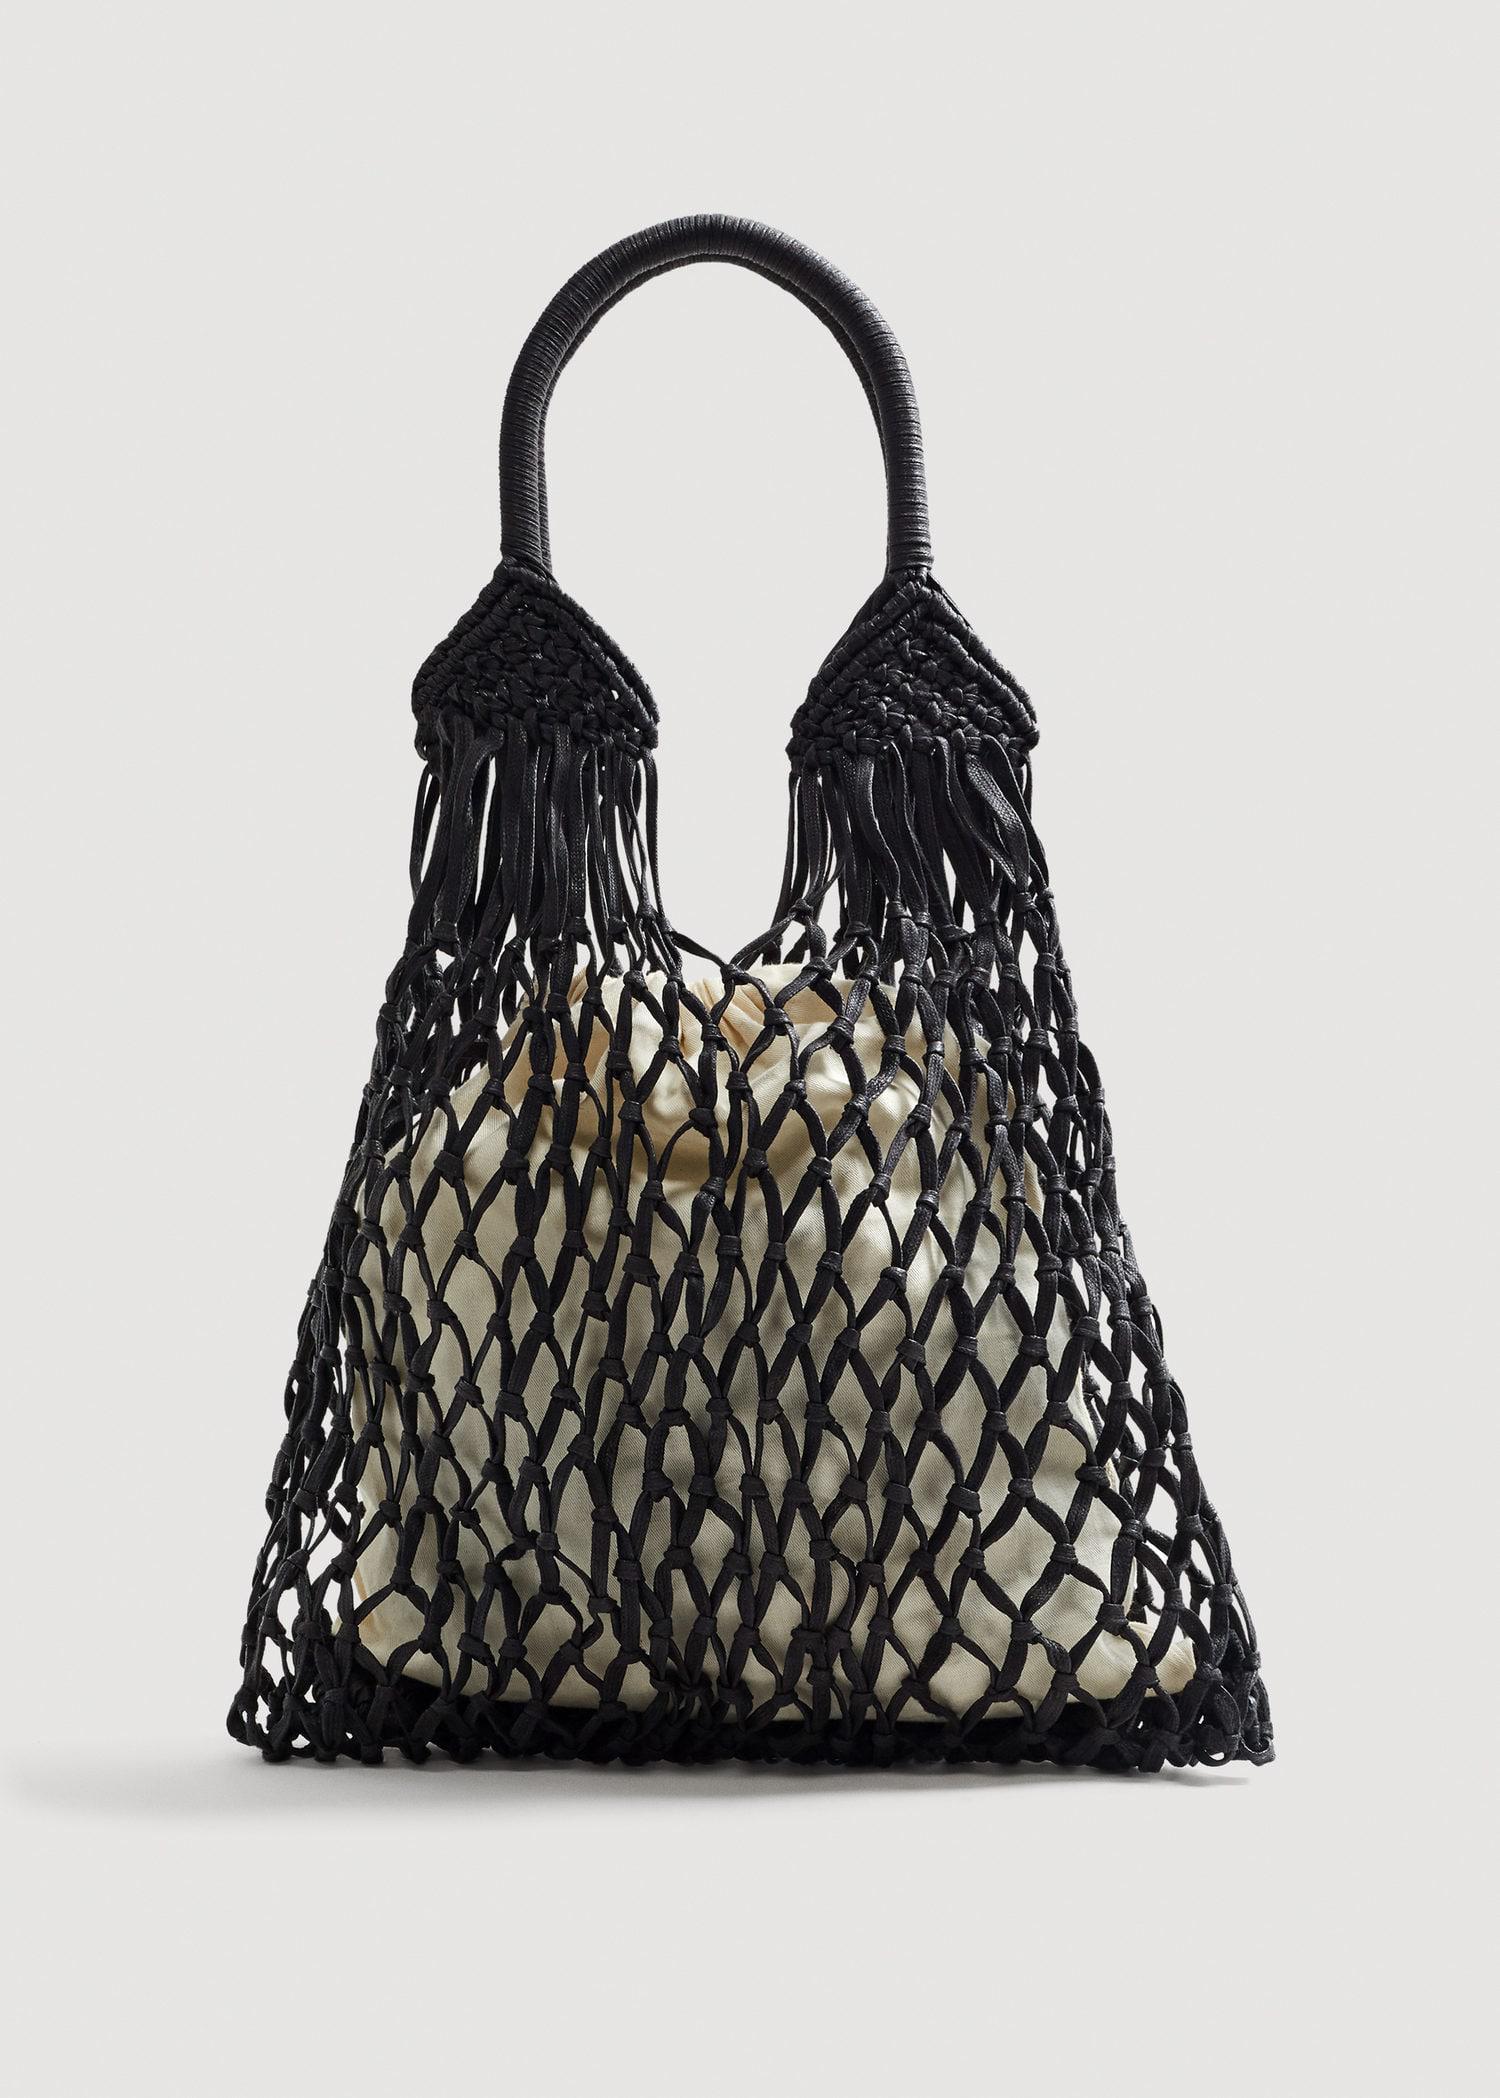 Mango Cotton Mesh Pattern Shopper Bag in Black - Lyst